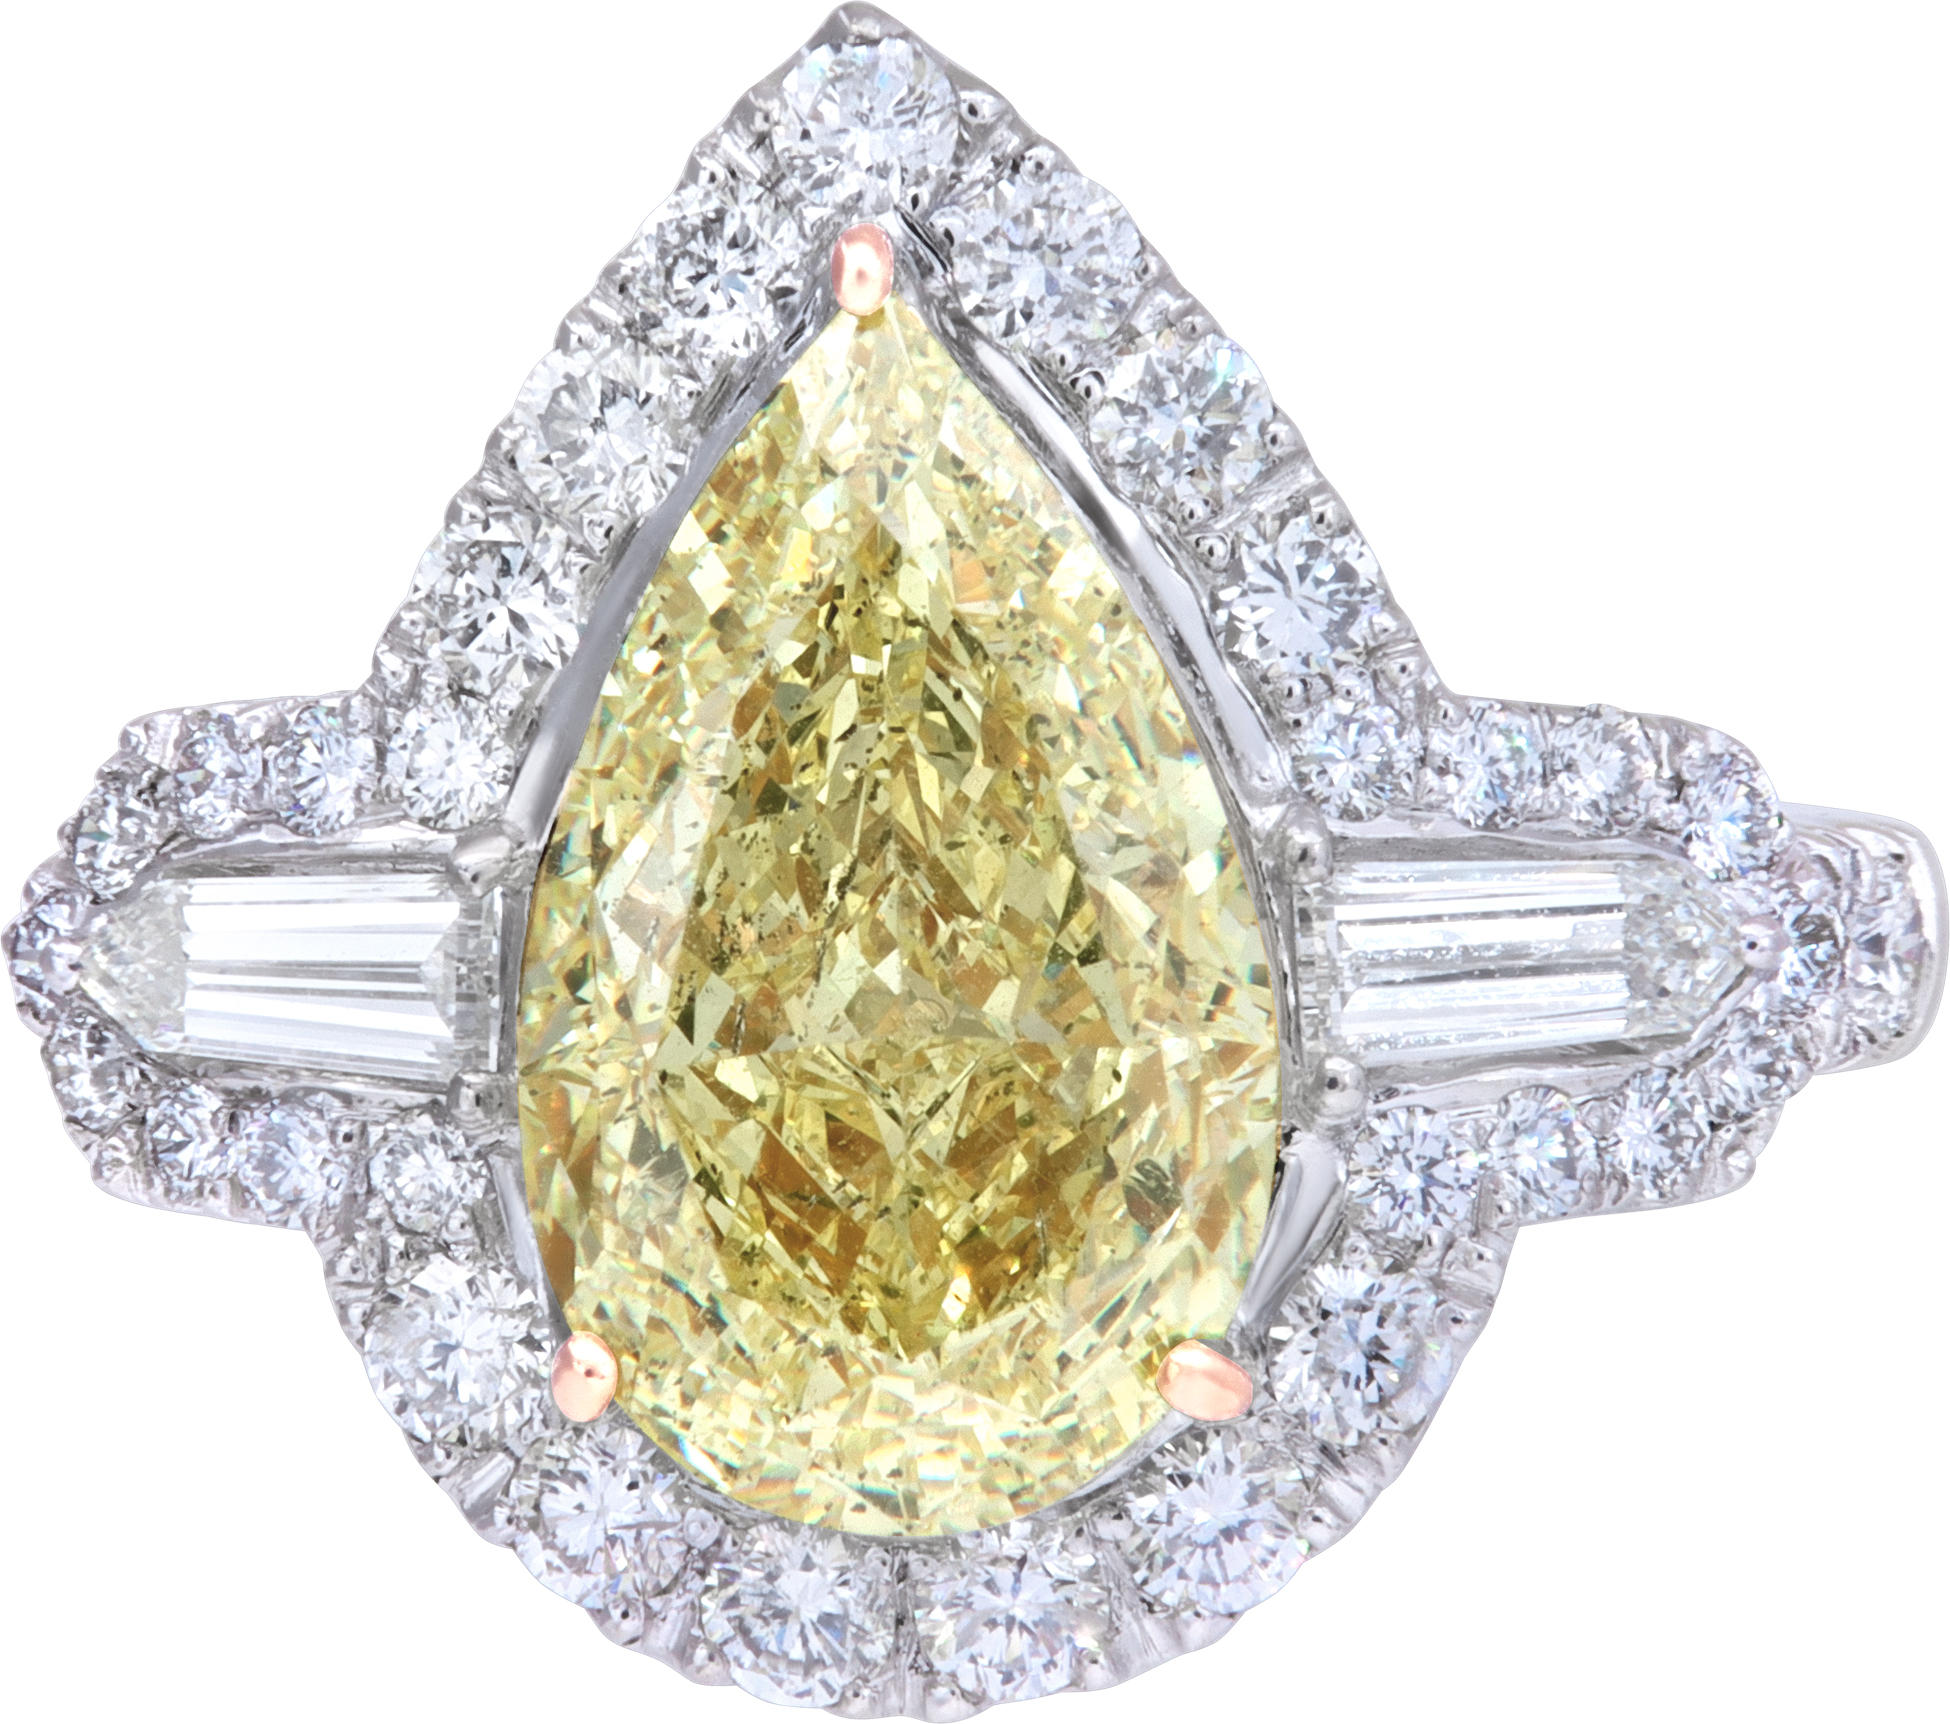 GIA certified 5.16 carat Fancy Yellow diamond ring in 18k